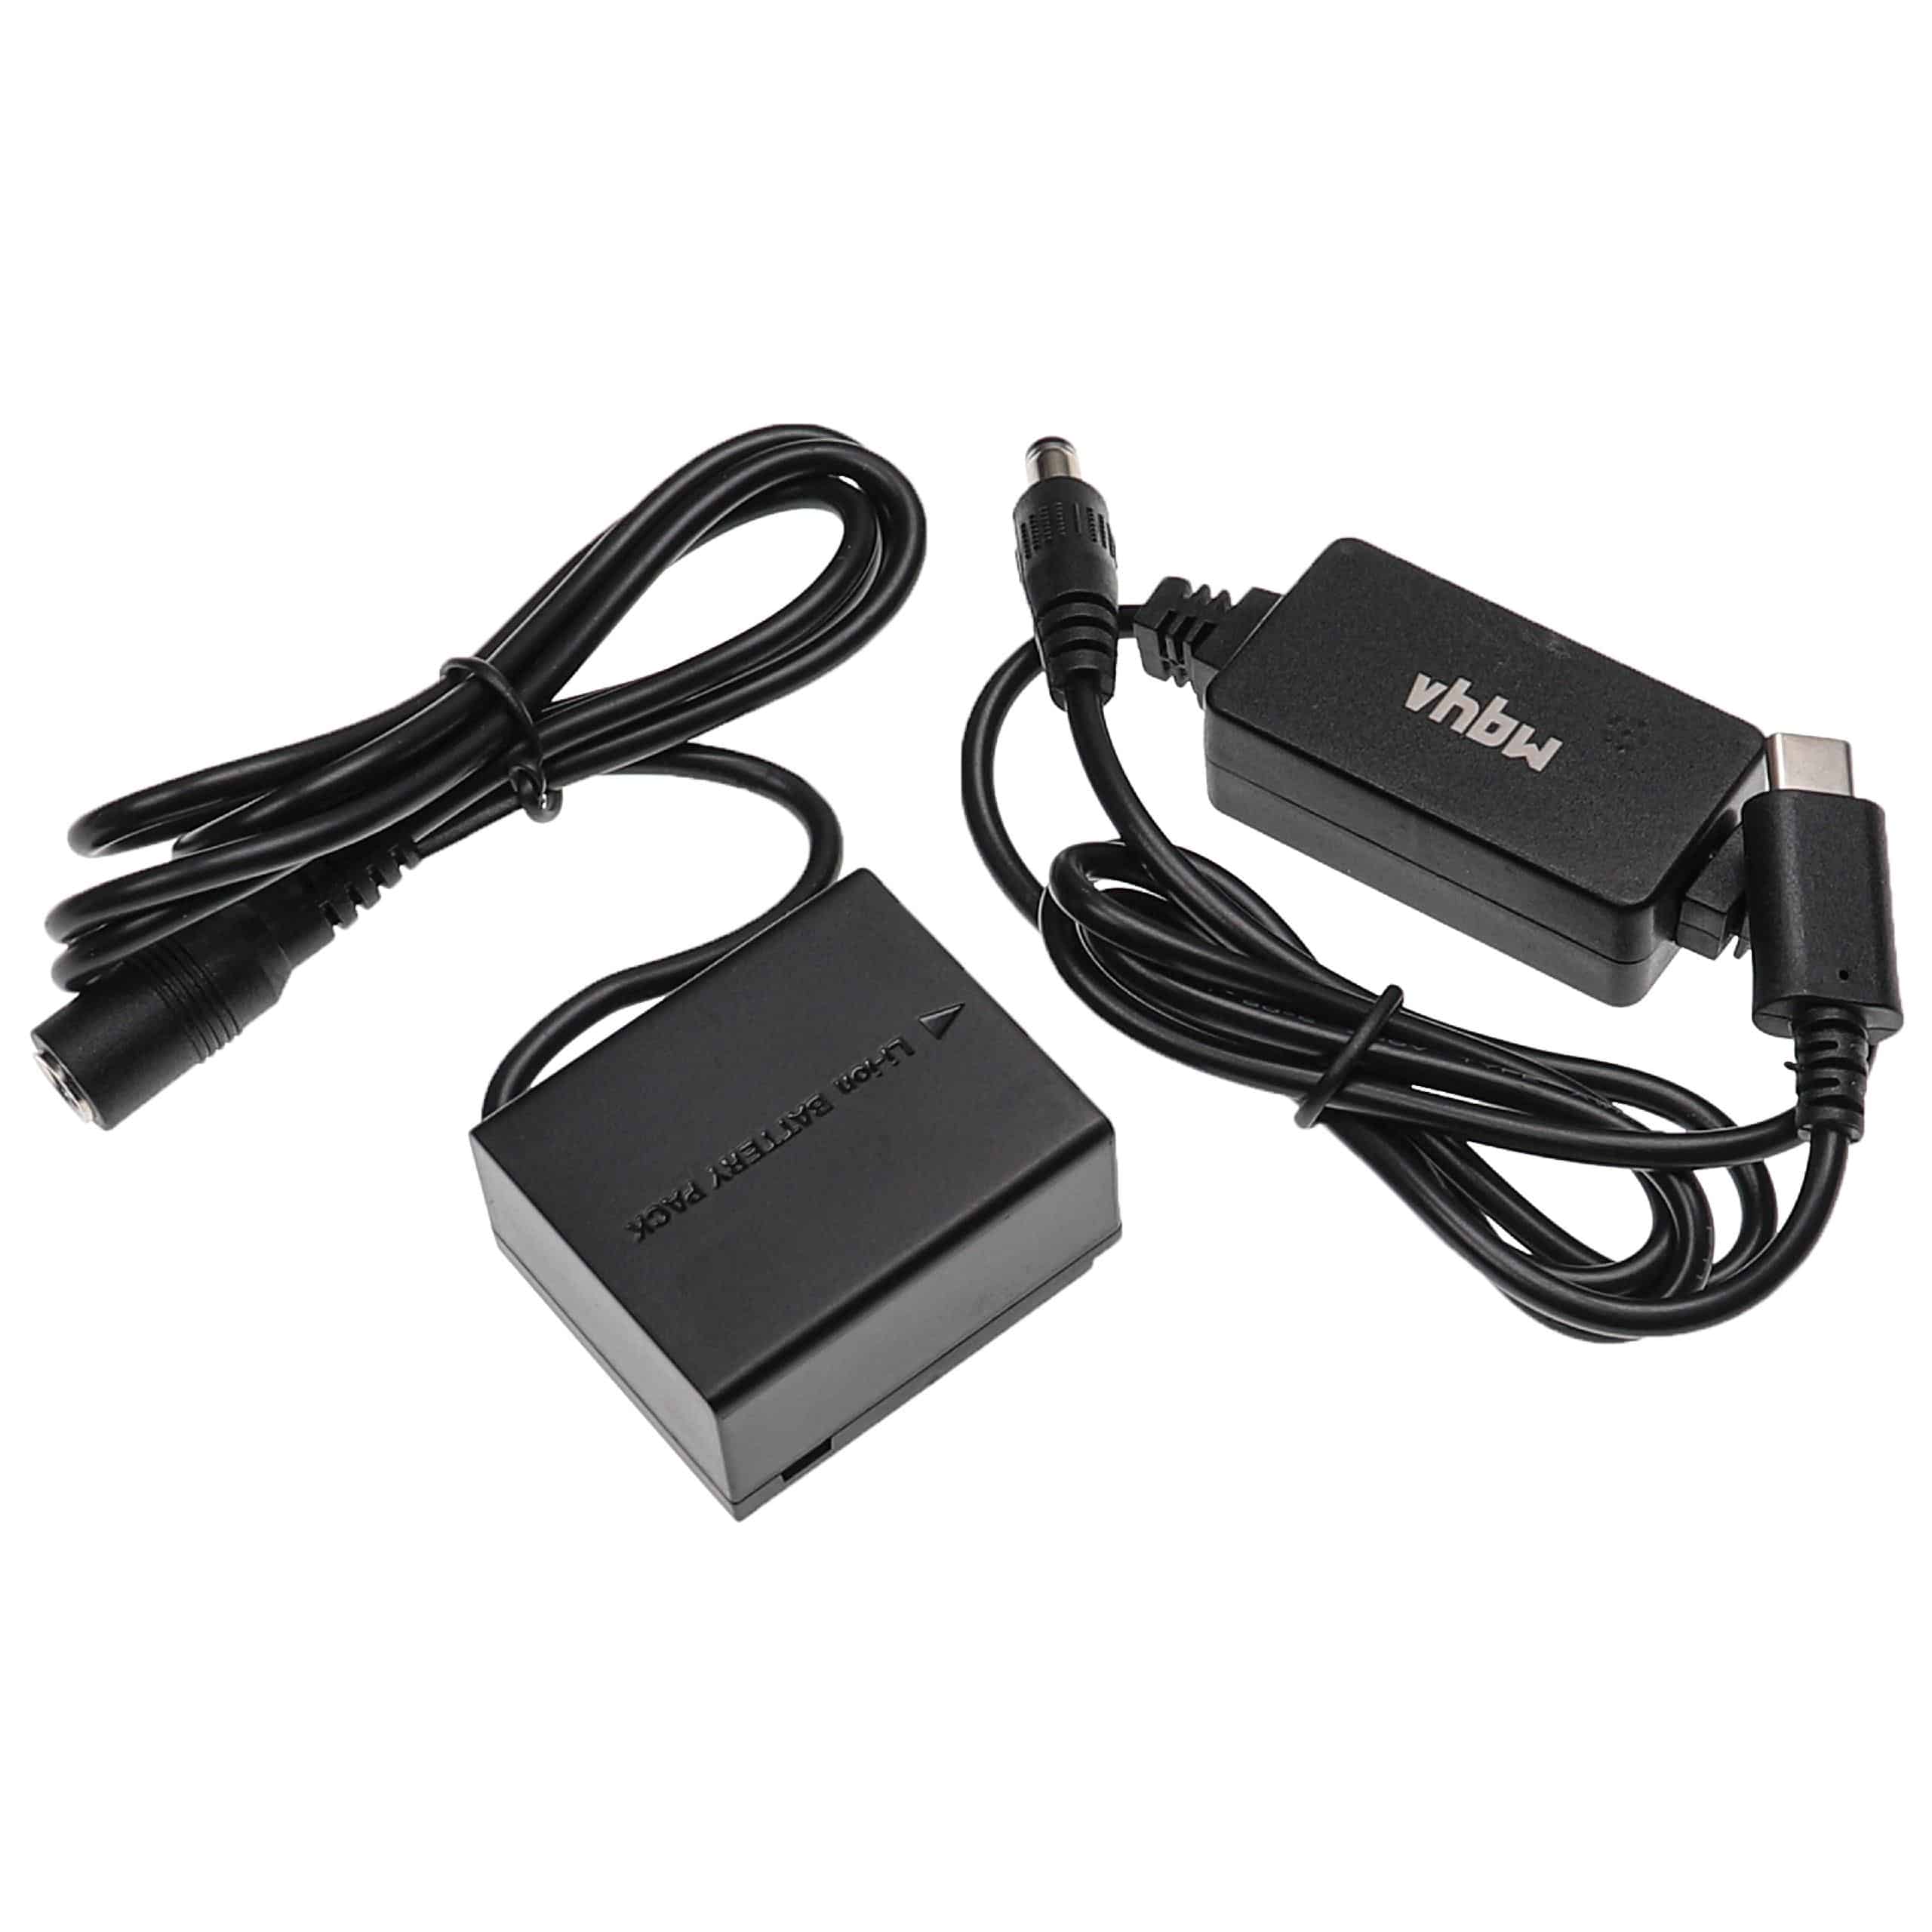 Fuente alimentación USB reemplaza Panasonic DMW-AC8 para cámaras + acoplador CC reemplaza Panasonic DMW-DCC3